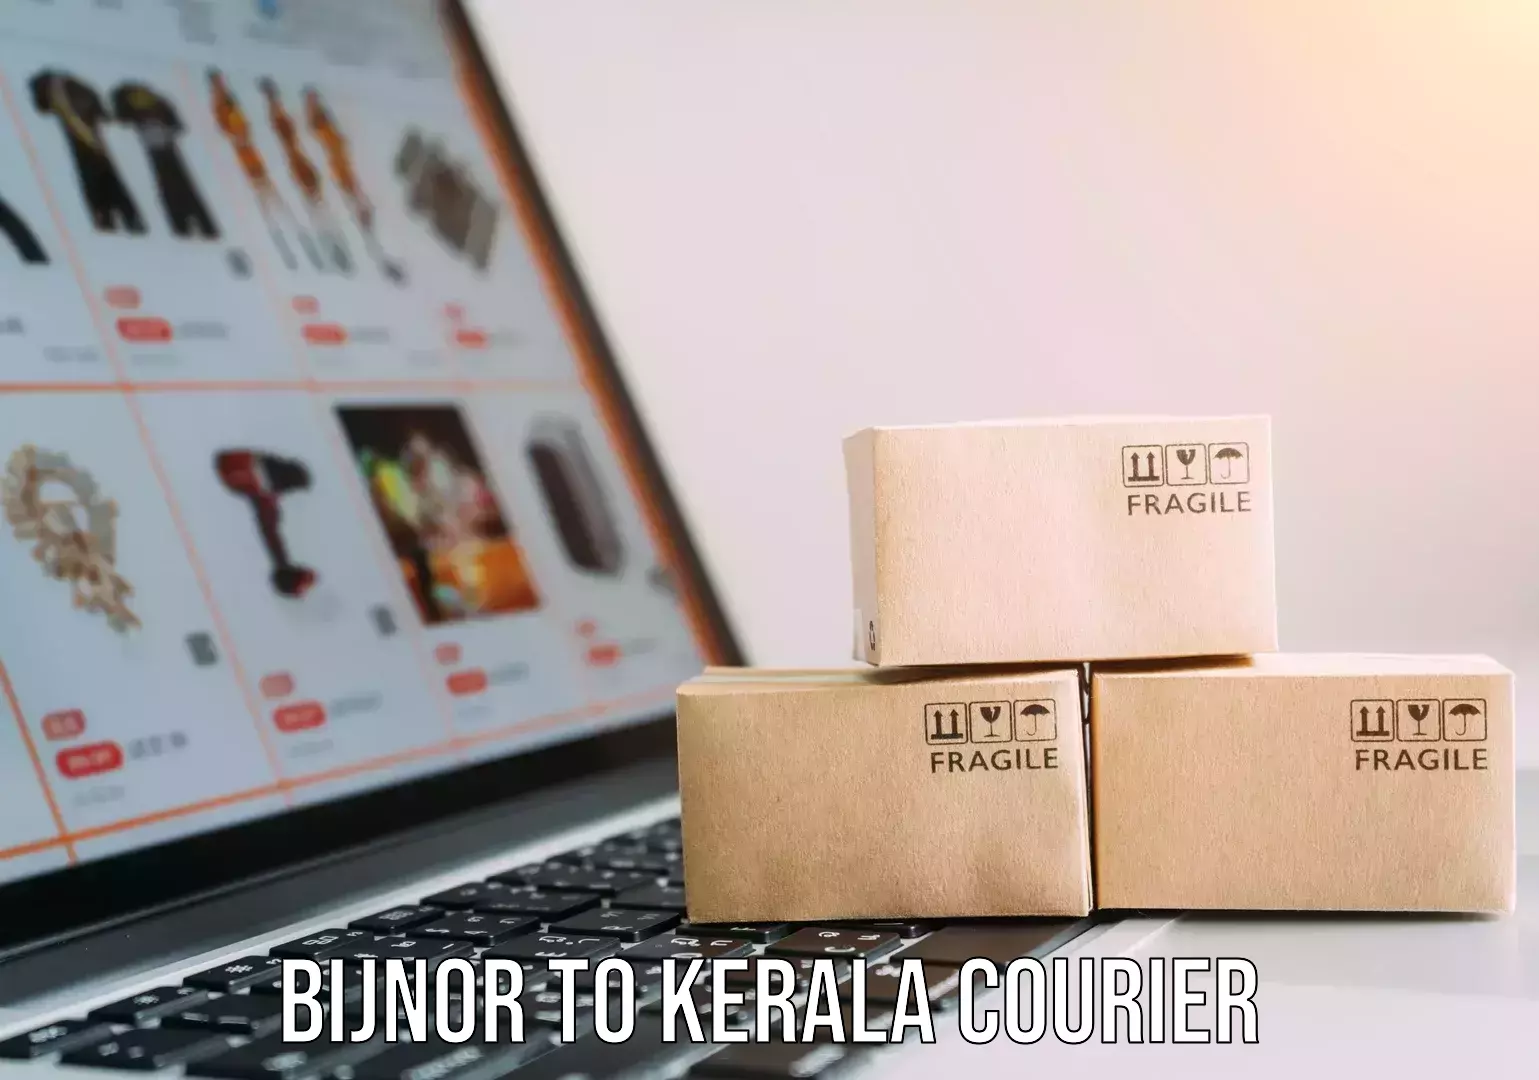 Local delivery service Bijnor to Kerala